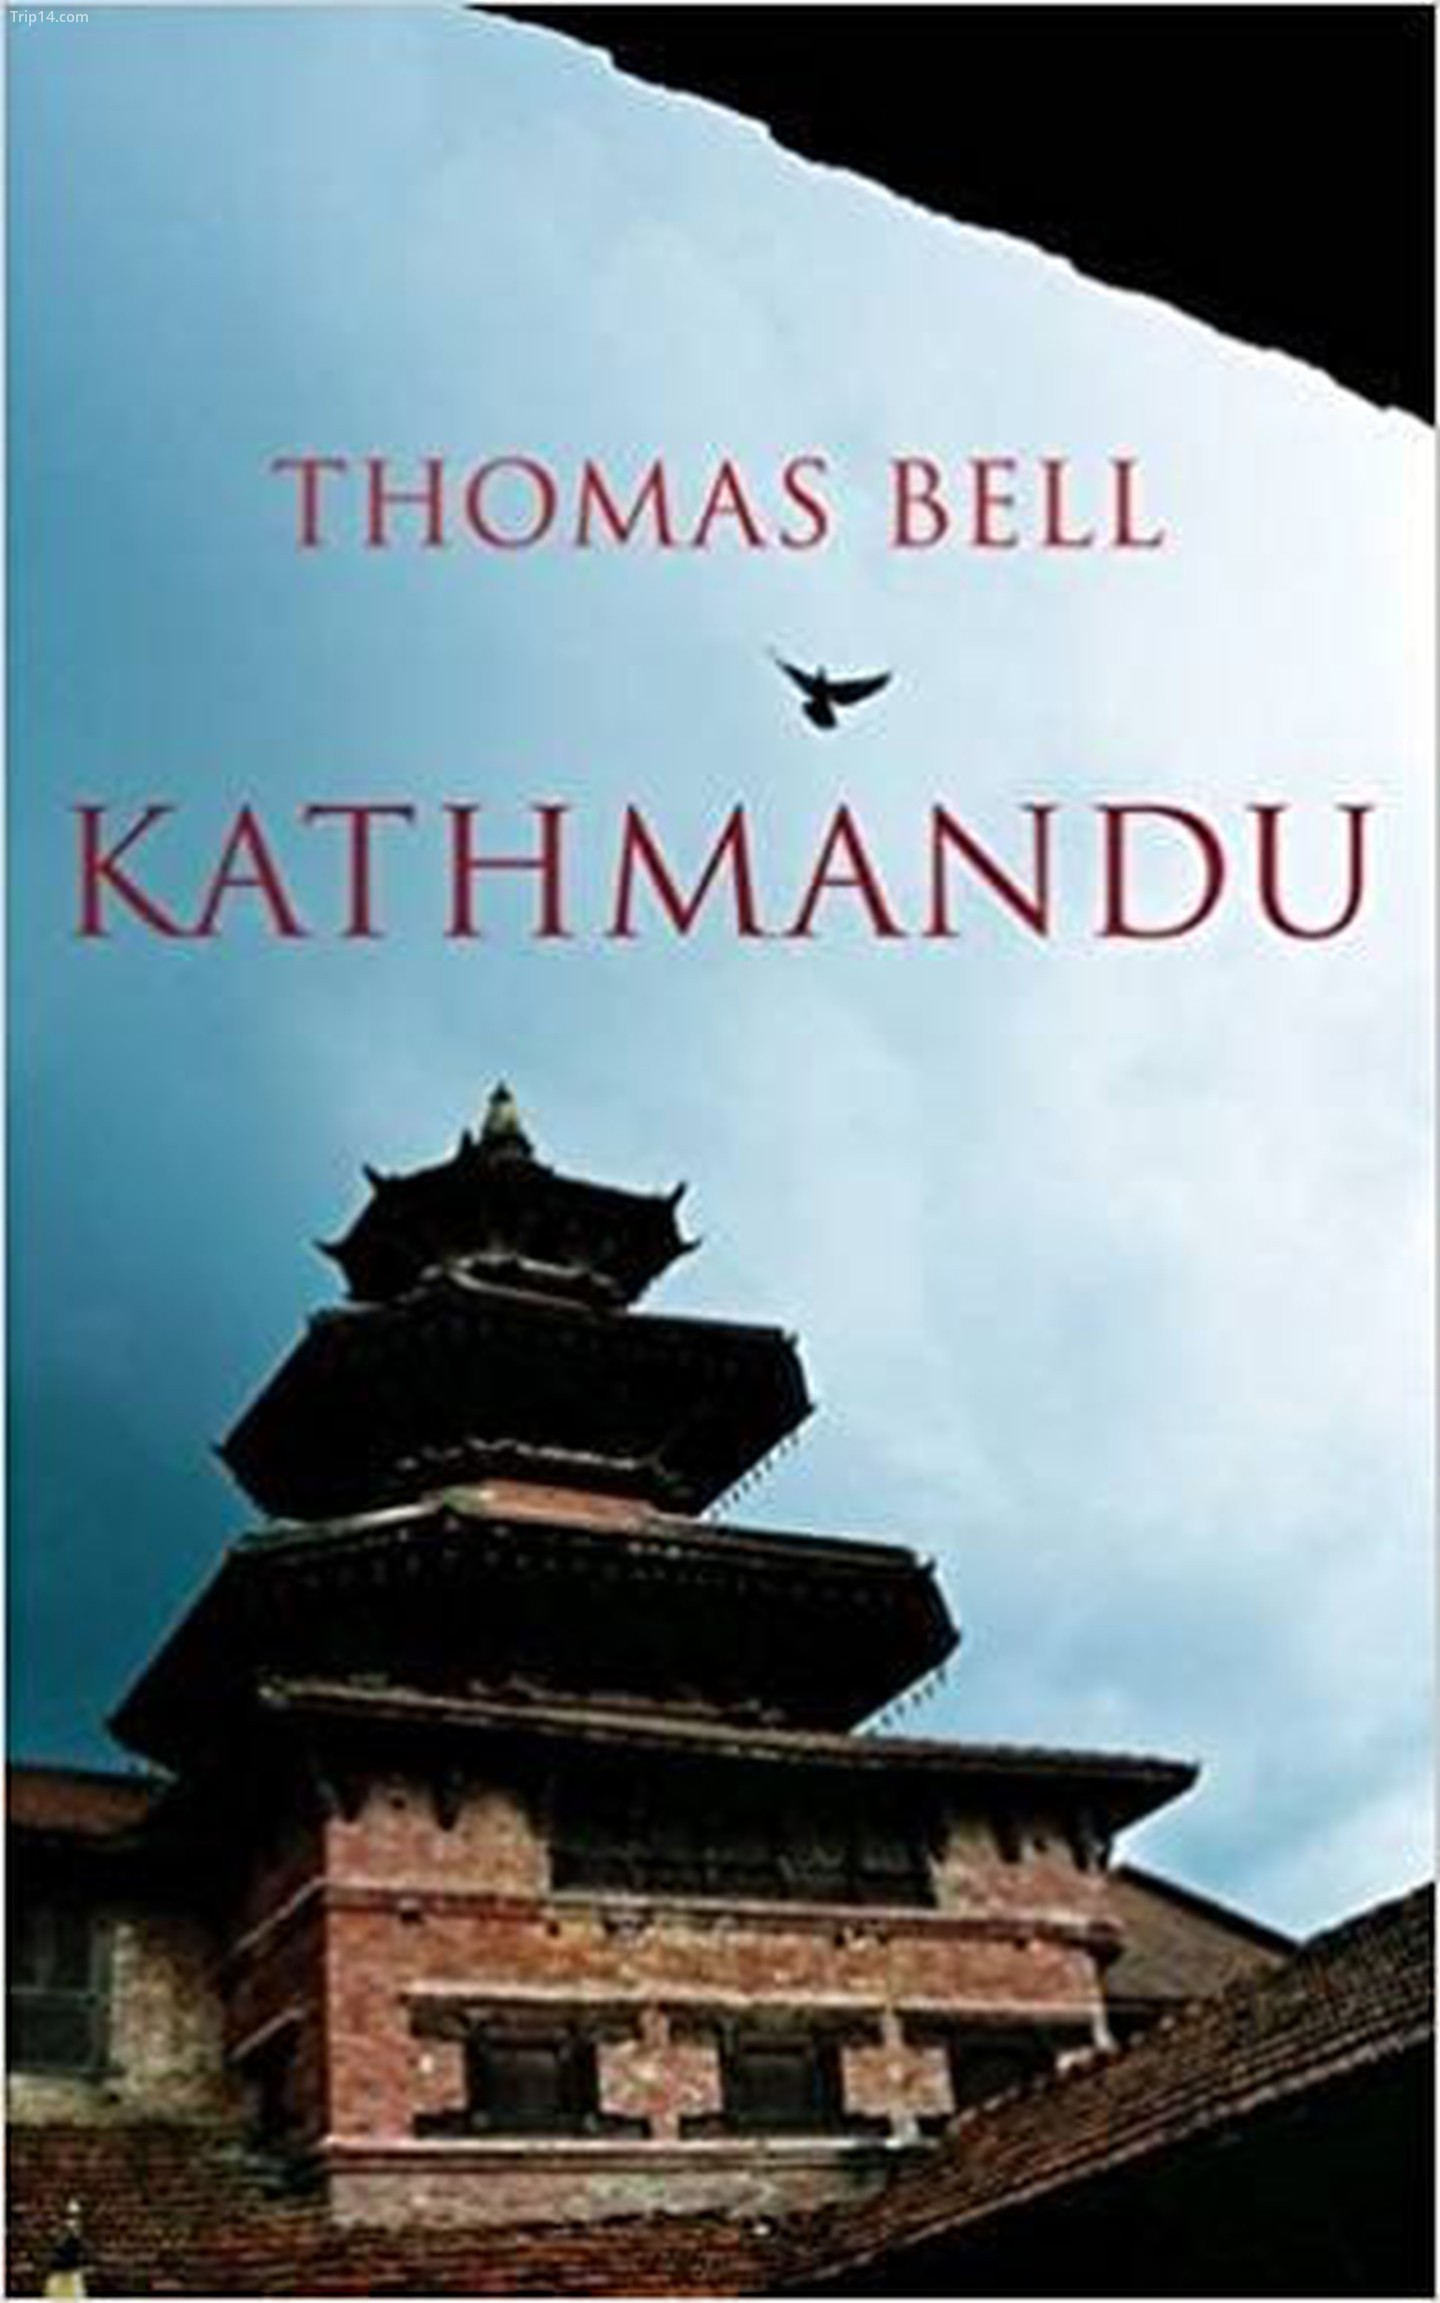 Kathmandu (2016) bởi Thomas Bell